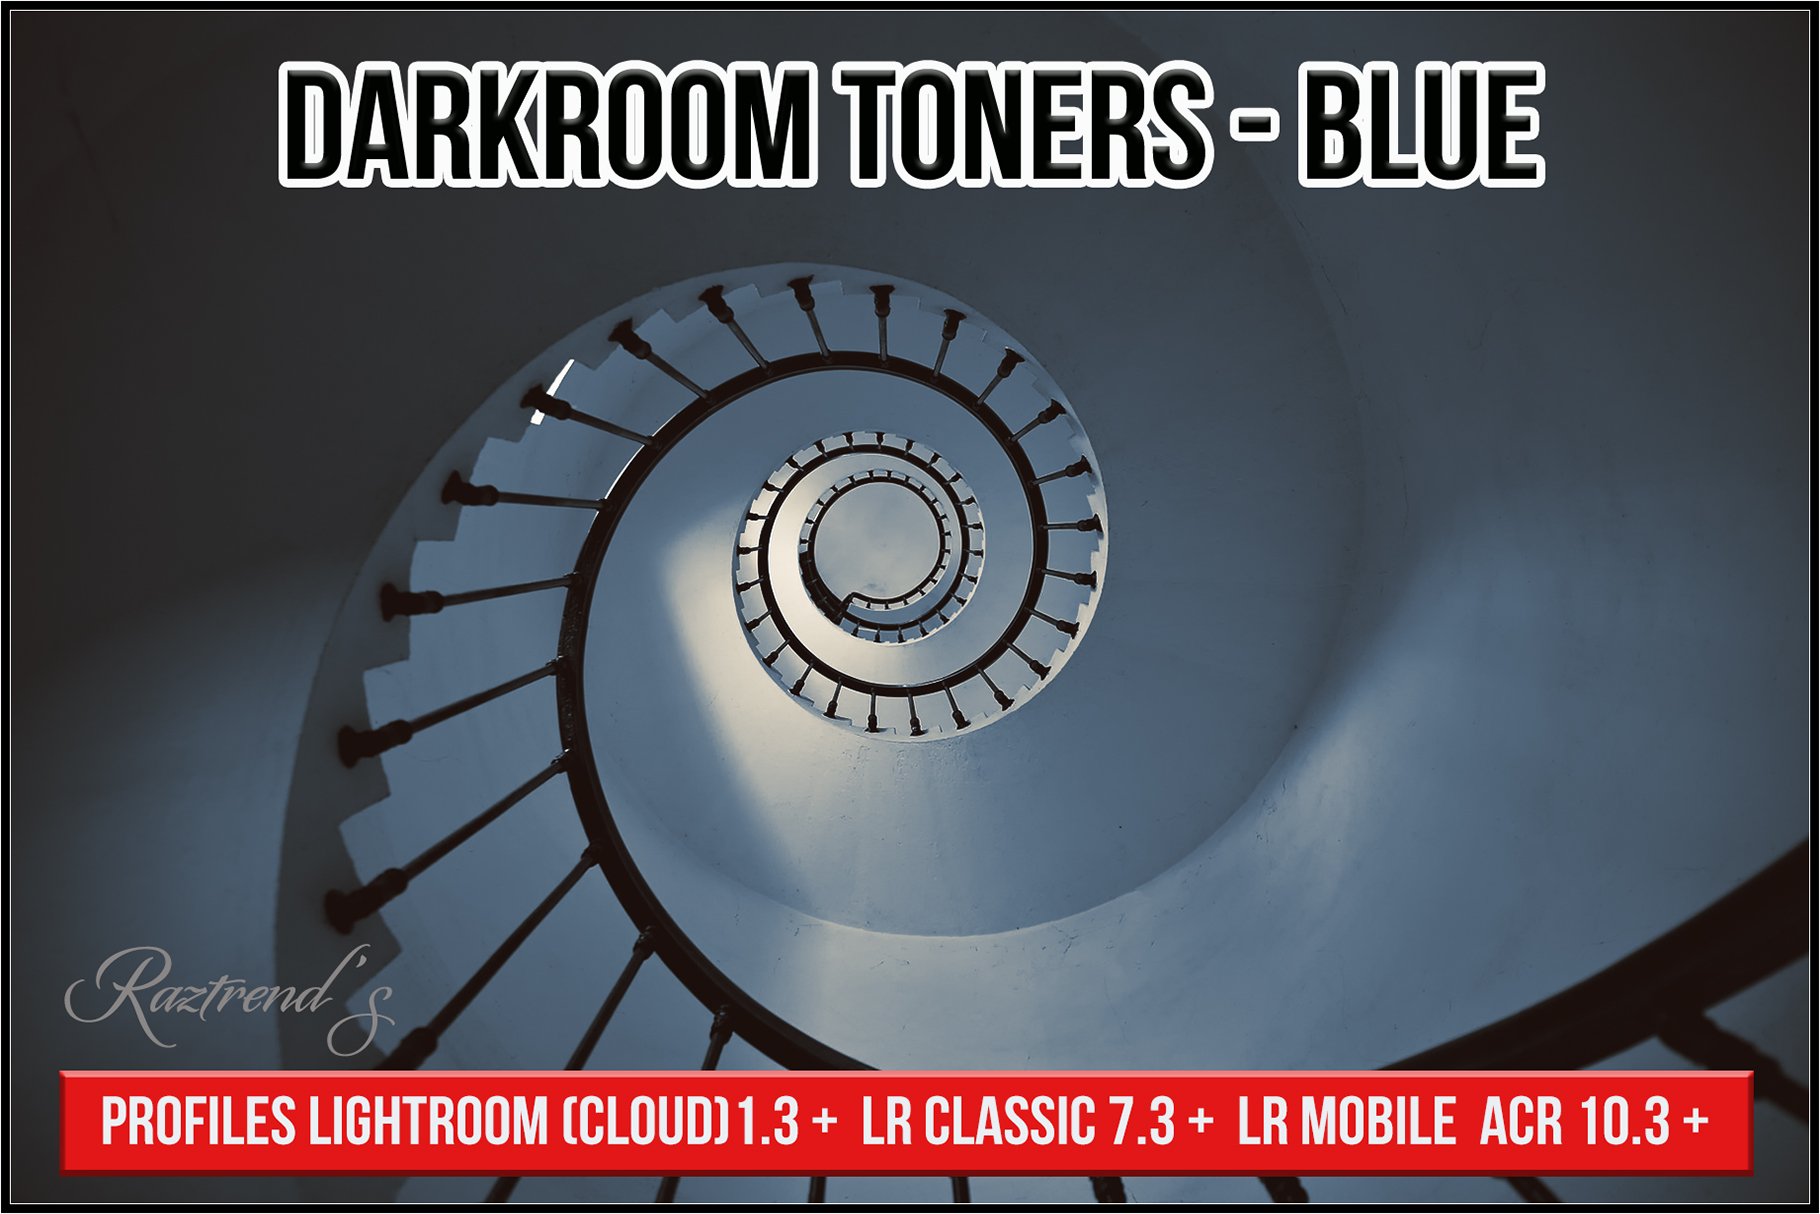 Darkroom Toners - Bluecover image.